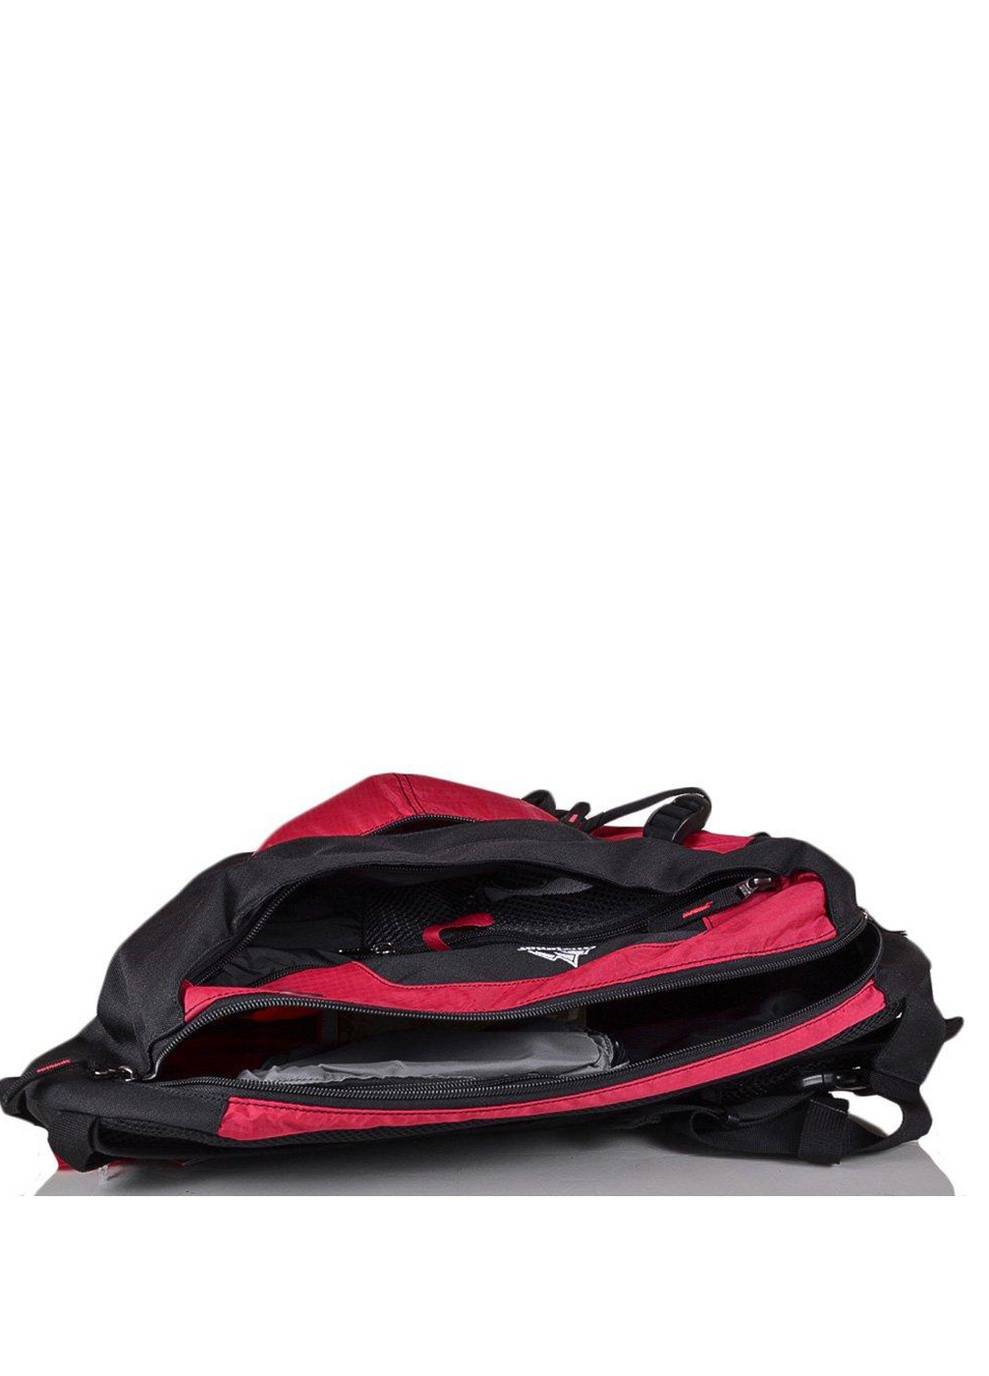 Мужской спортивный рюкзак 34х44х17 см Onepolar (250097383)